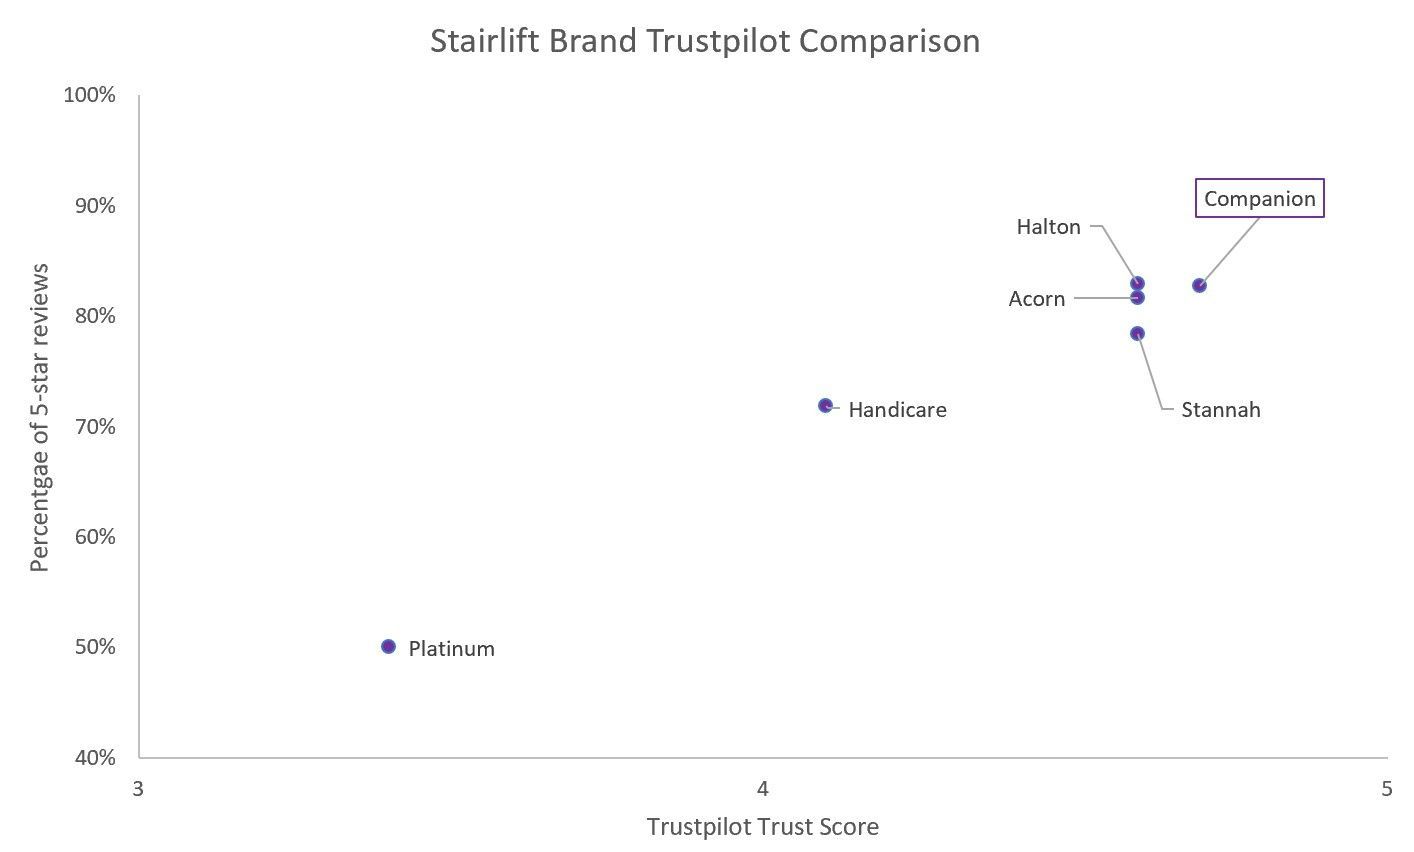 Companion Trustpilot scores vs competitive set